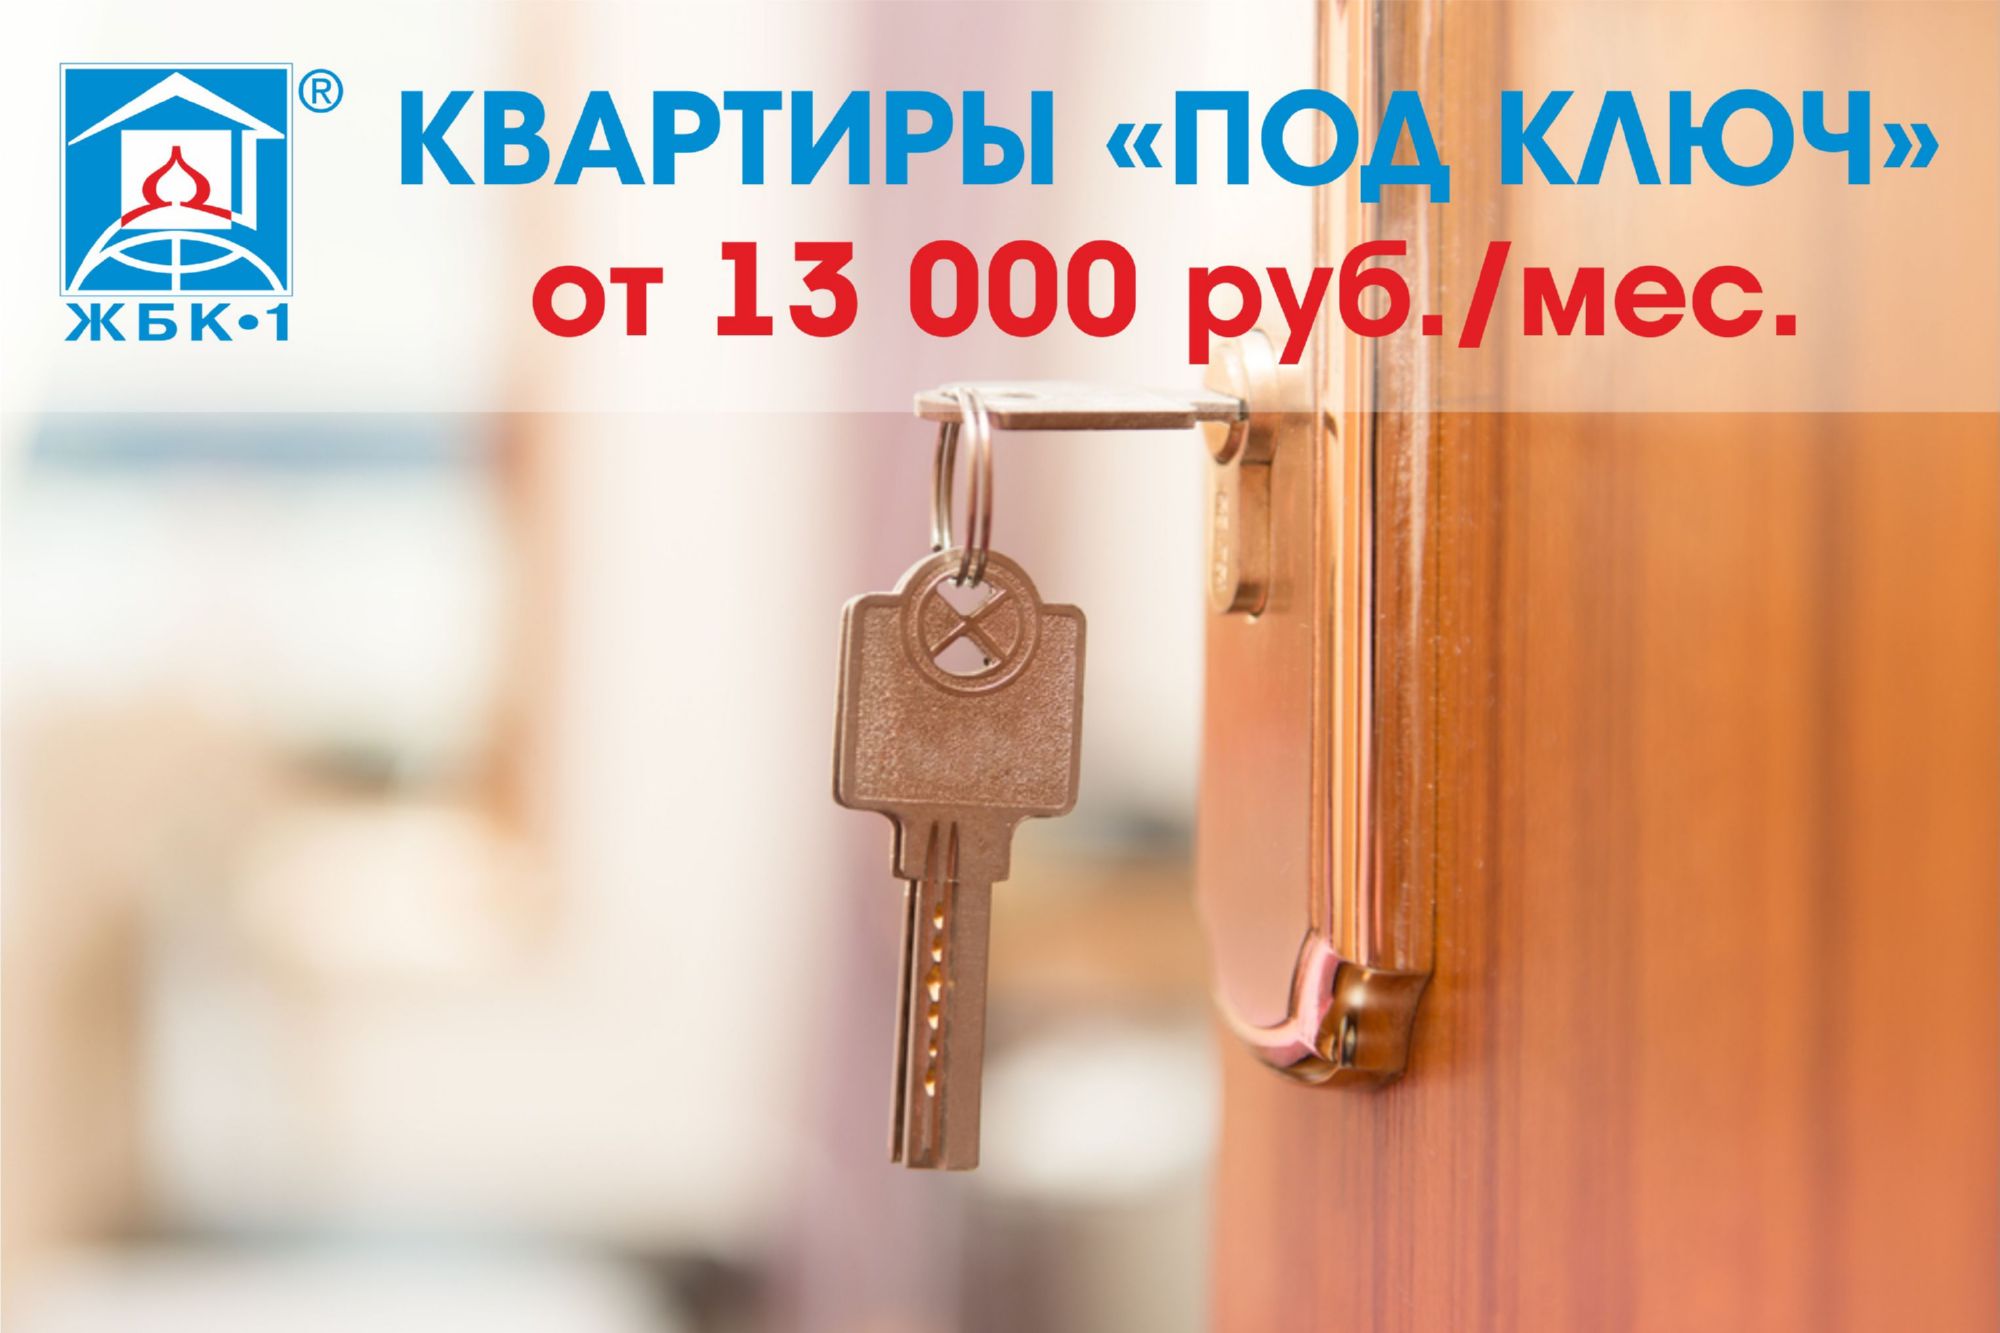 ЖБК-1!- квартиры от 13 000 руб/месяц!